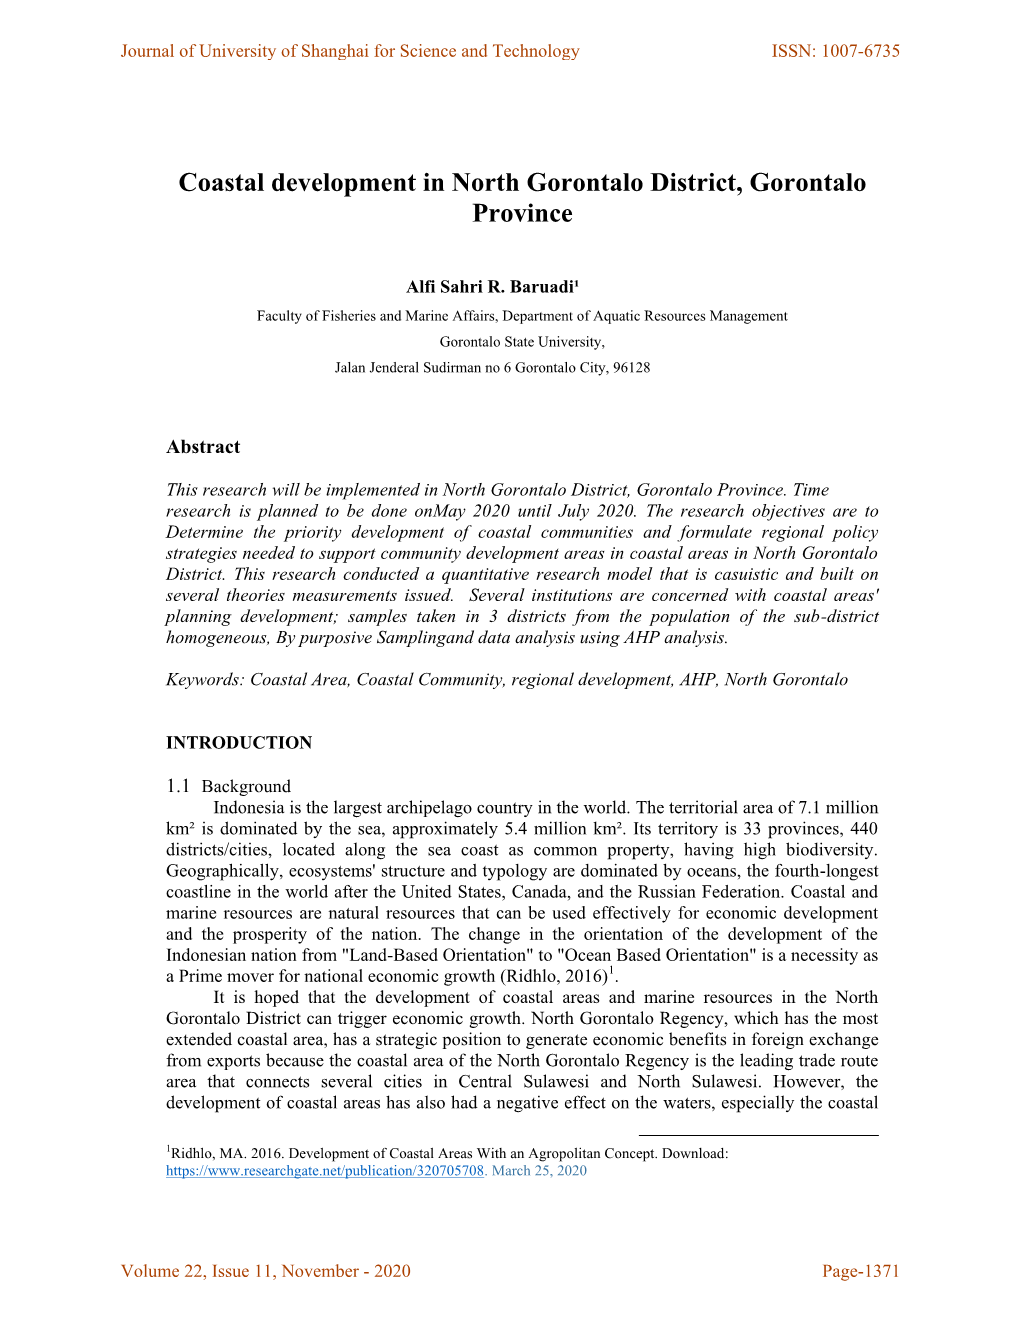 Coastal Development in North Gorontalo District, Gorontalo Province